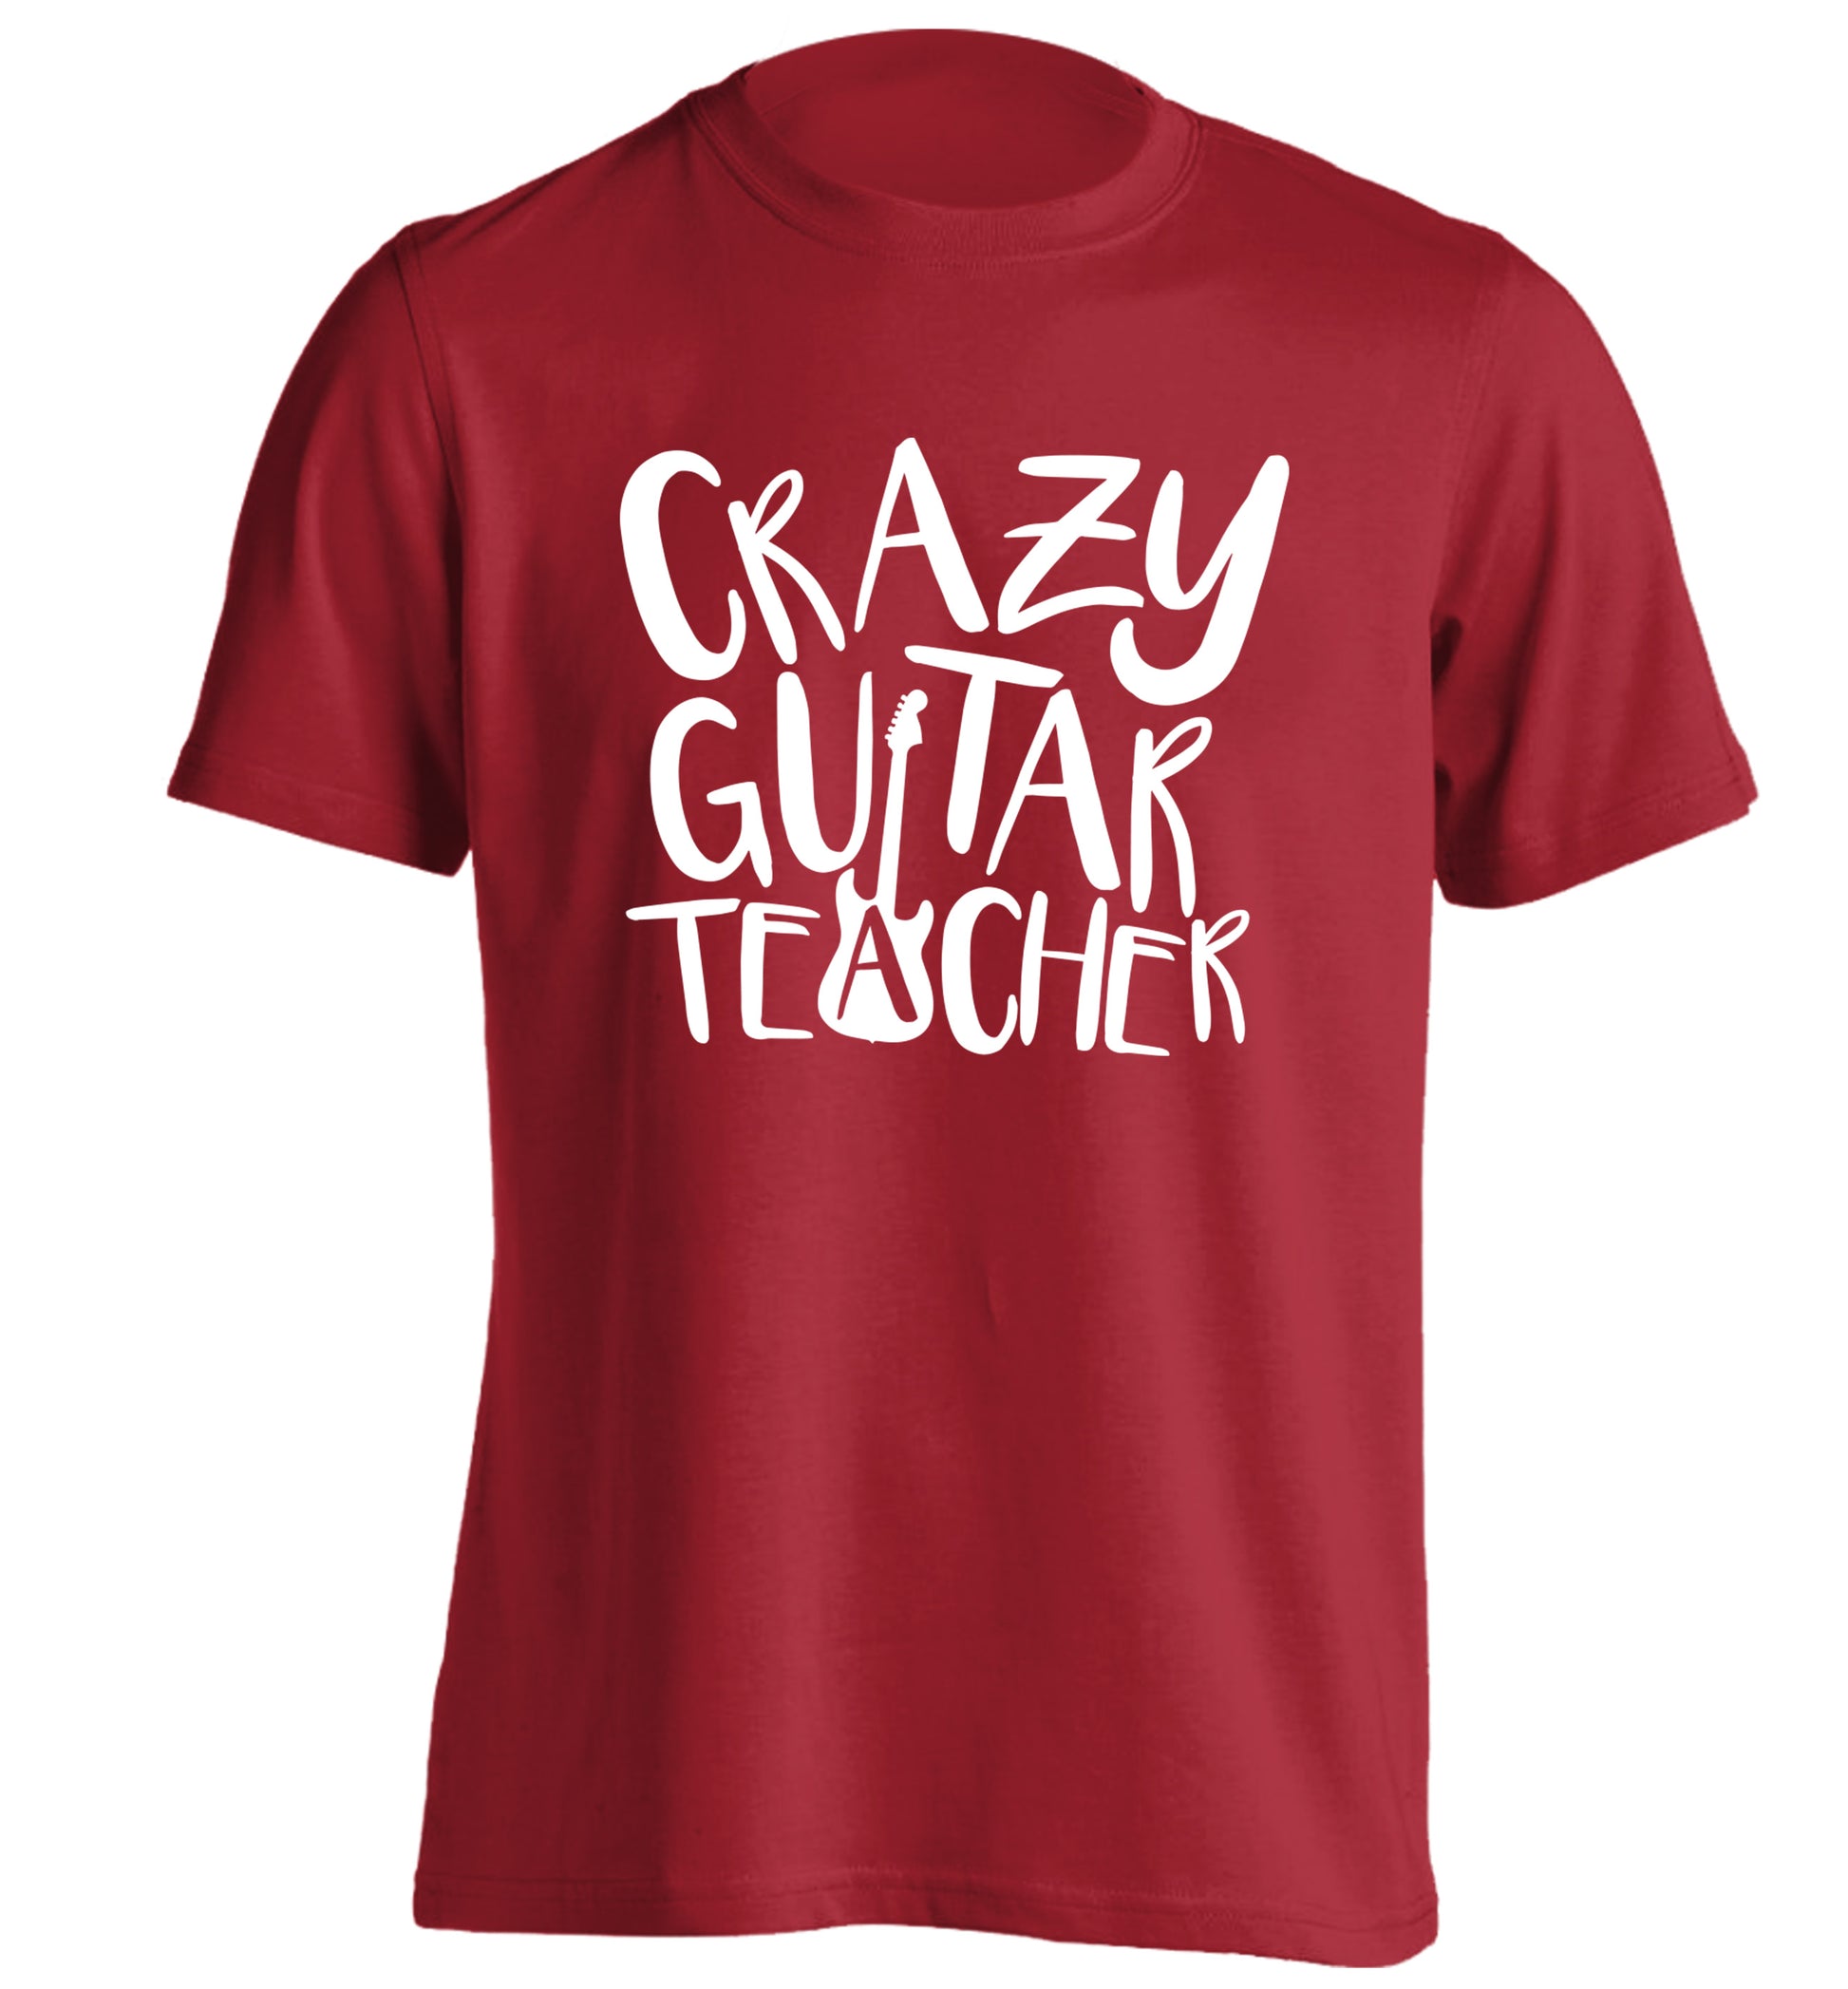 Crazy guitar teacher adults unisex red Tshirt 2XL